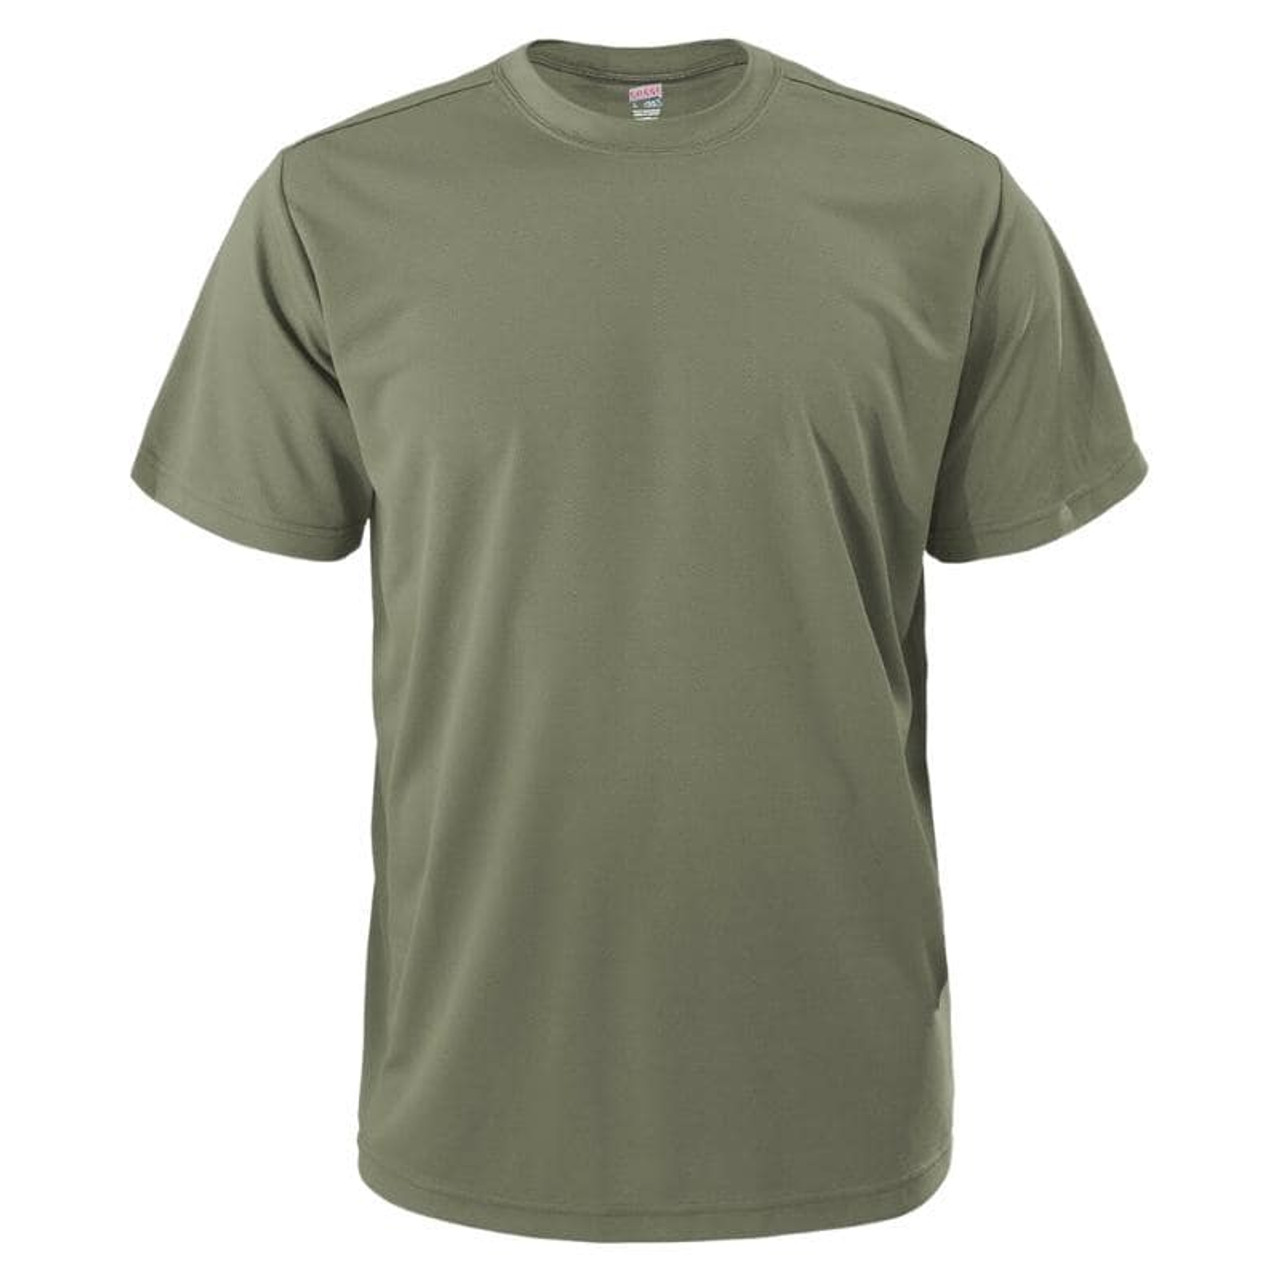 Soffe Military Performance T-Shirt | 995A